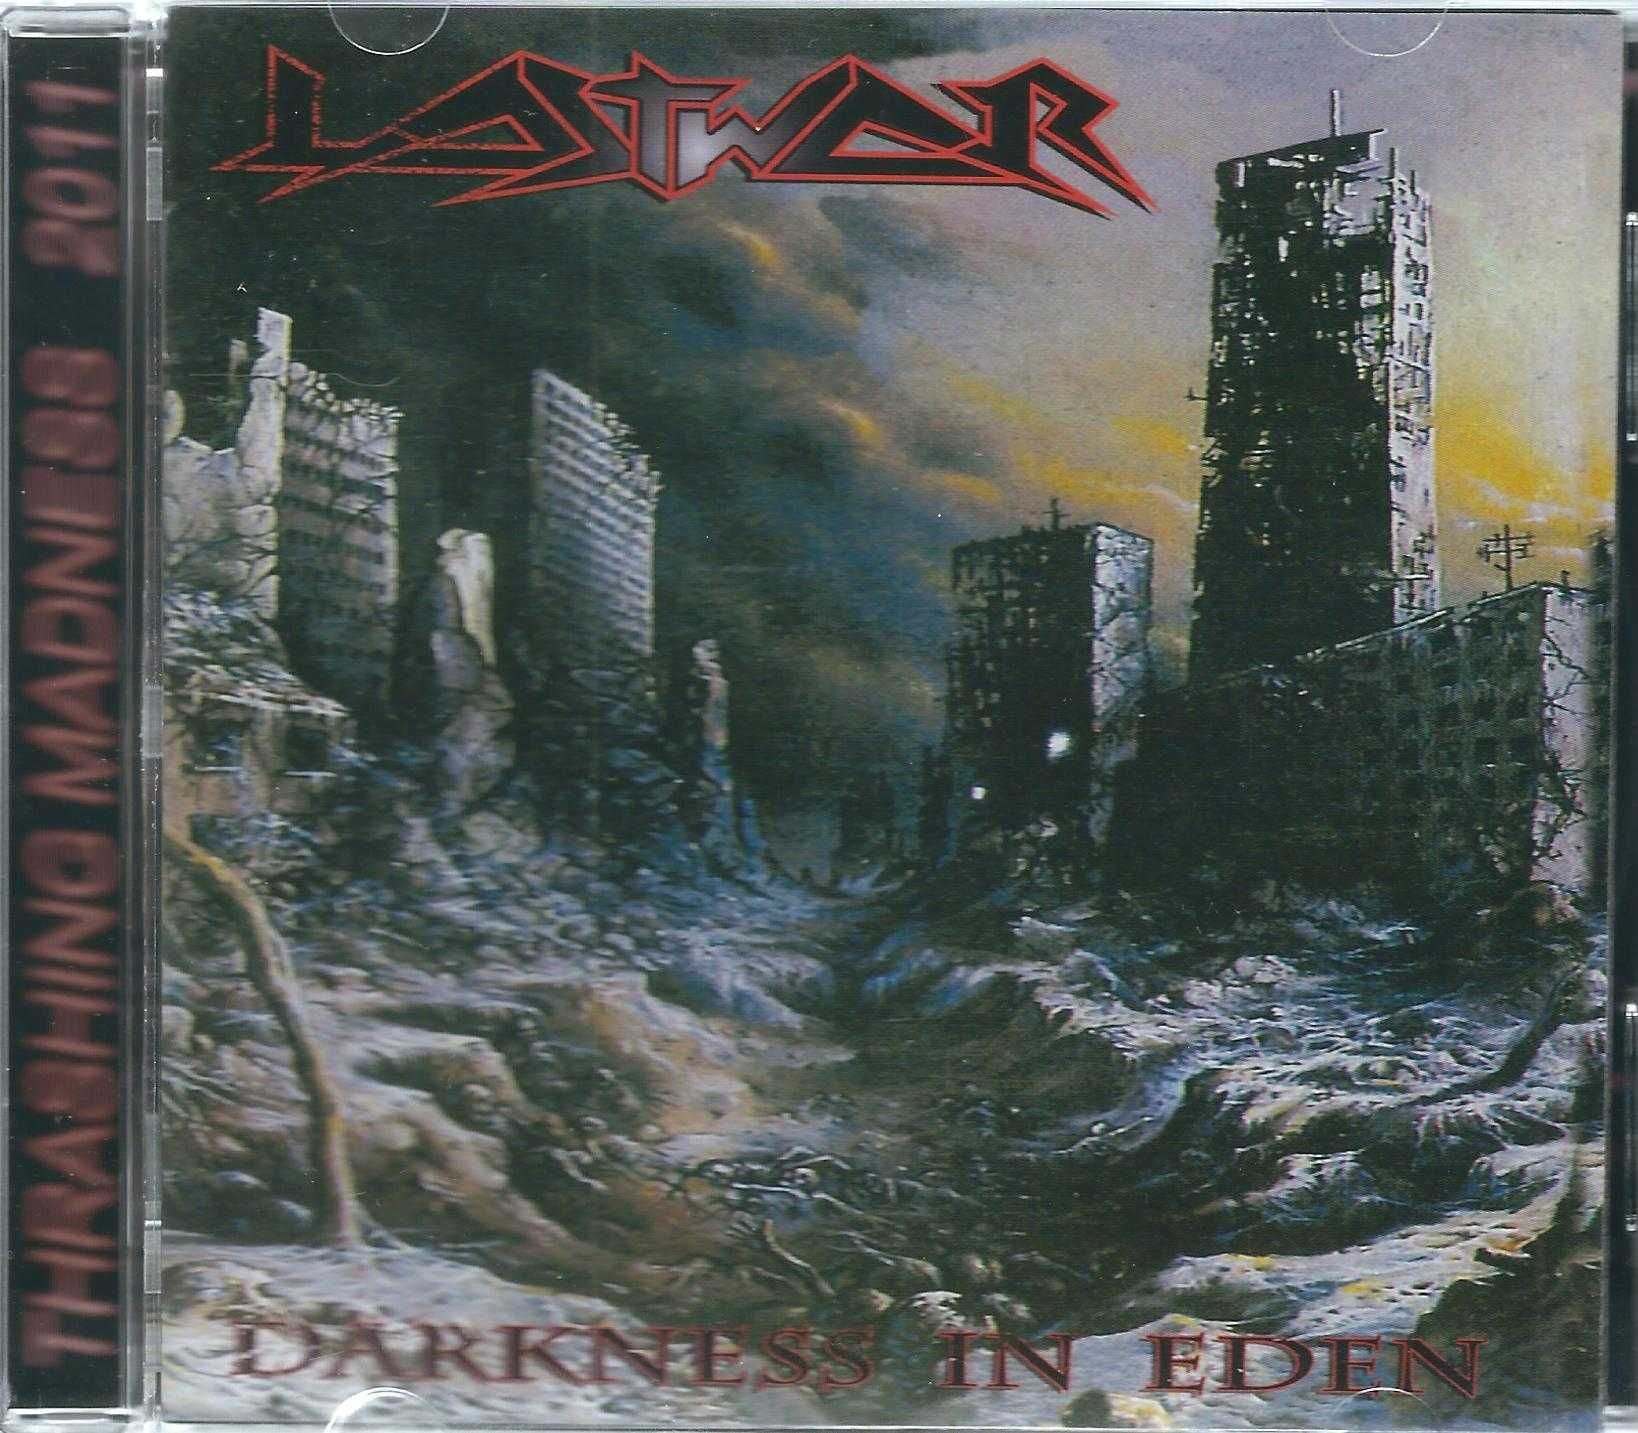 CD Lastwar - Darkness In Eden-Demo 94' (2011) (Thrashing Madness Pr.)